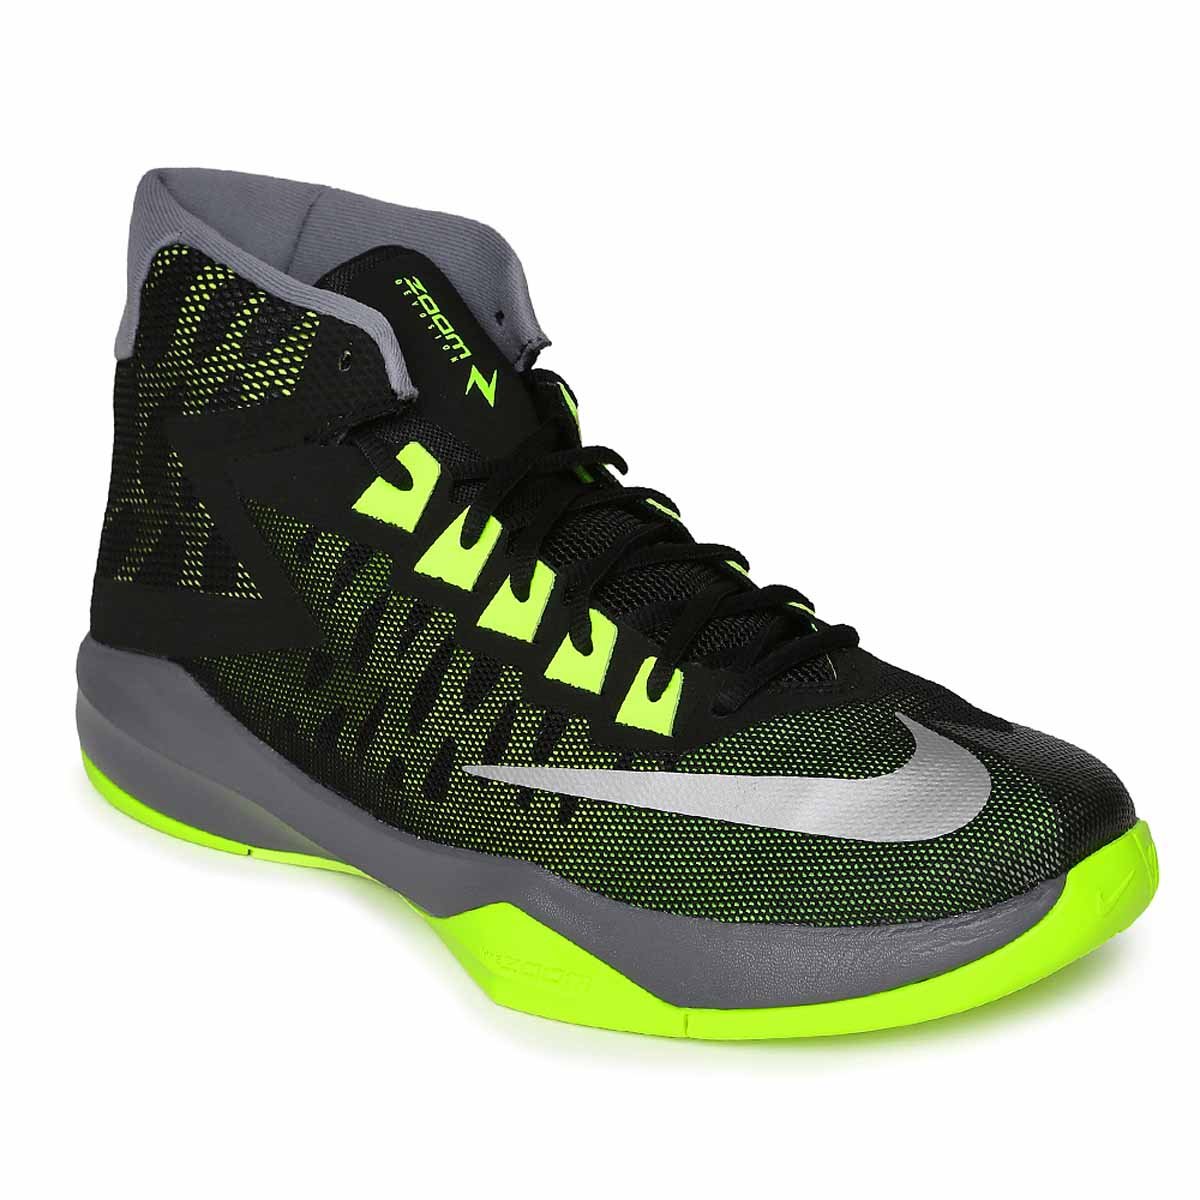 Buy Nike Zoom Devosion Basketball Shoes (Black/Silver/Volt) Online